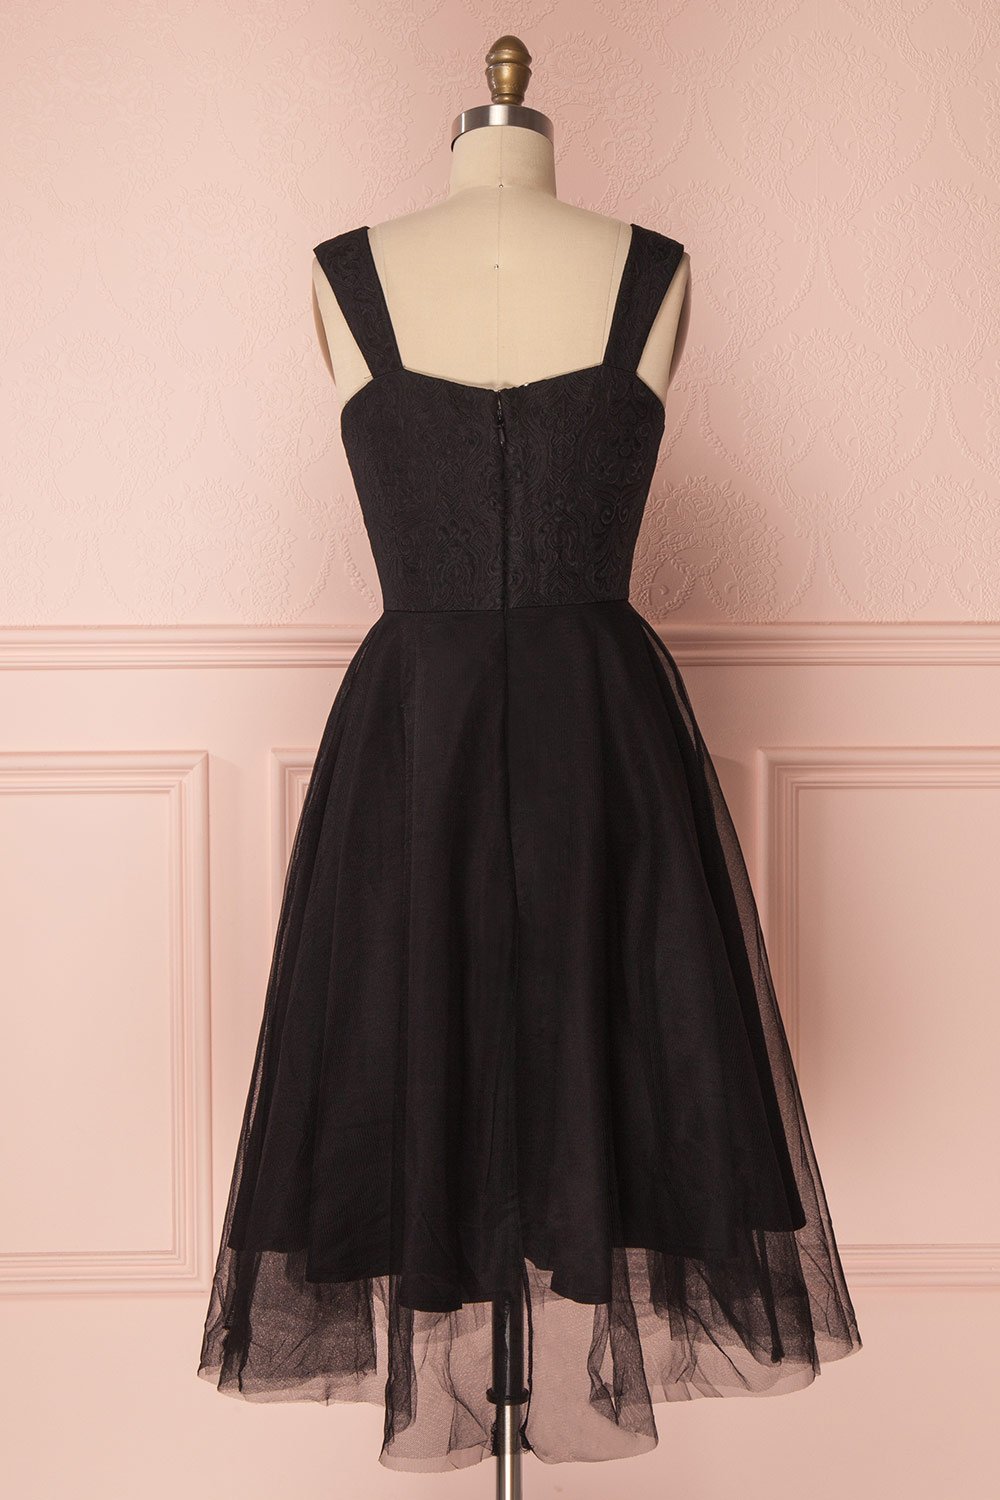 Ketty Dark | Black Tulle Dress